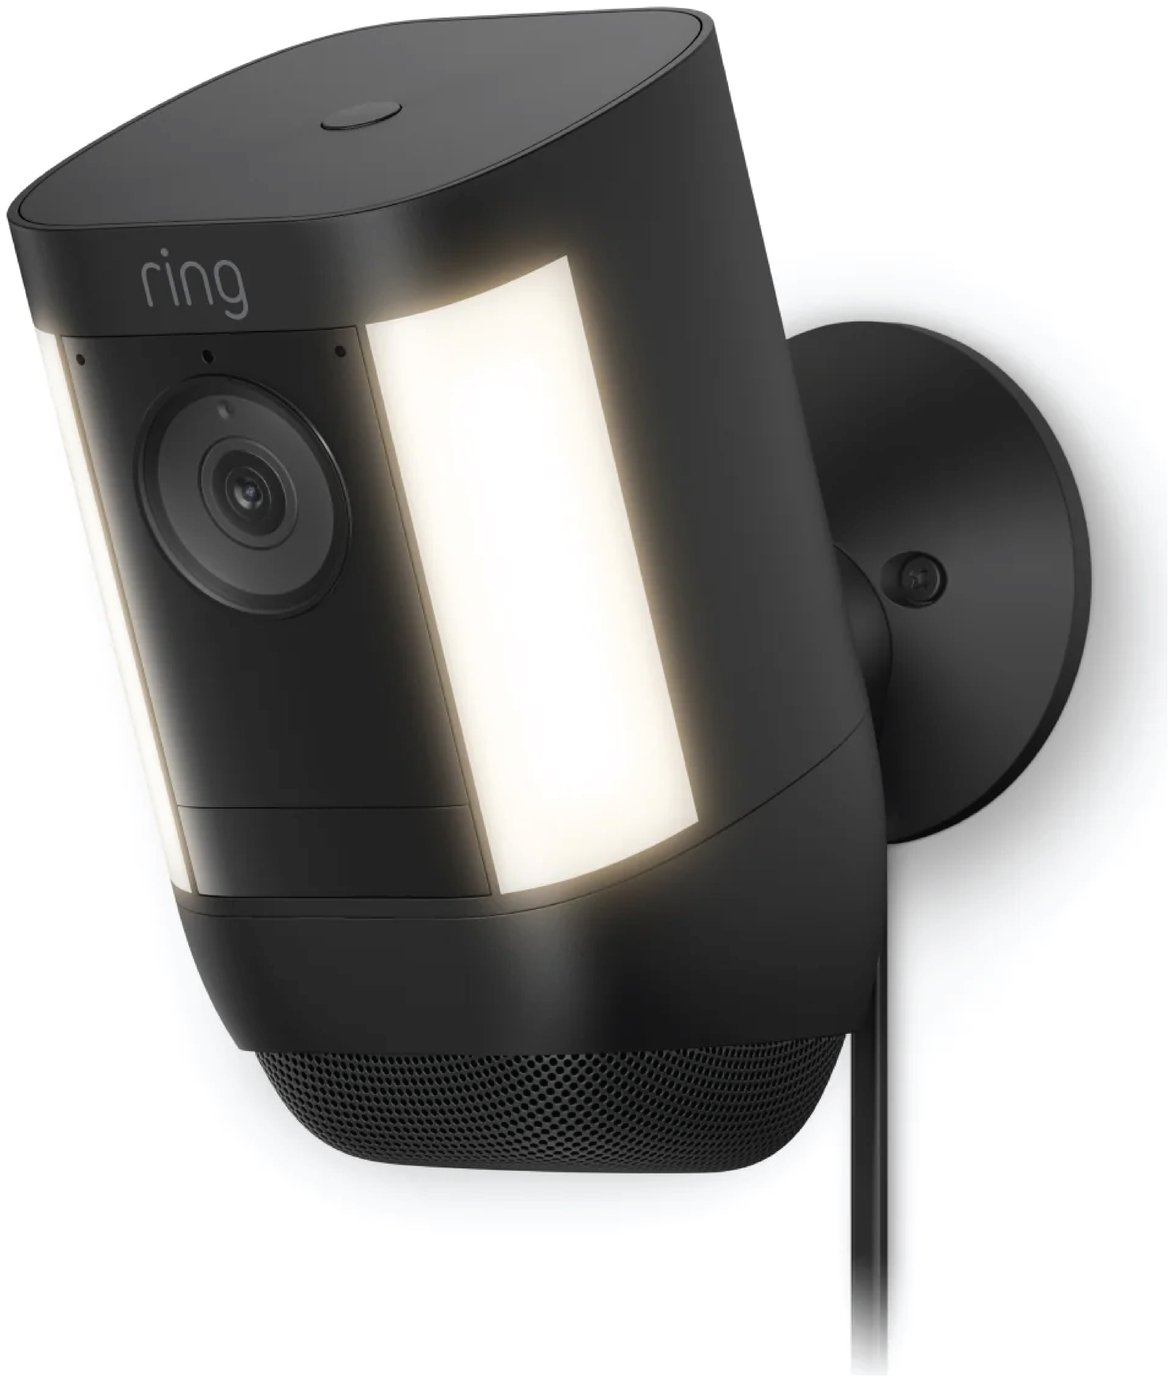 Ring Spotlight Cam Pro Plug In Security Camera - Black